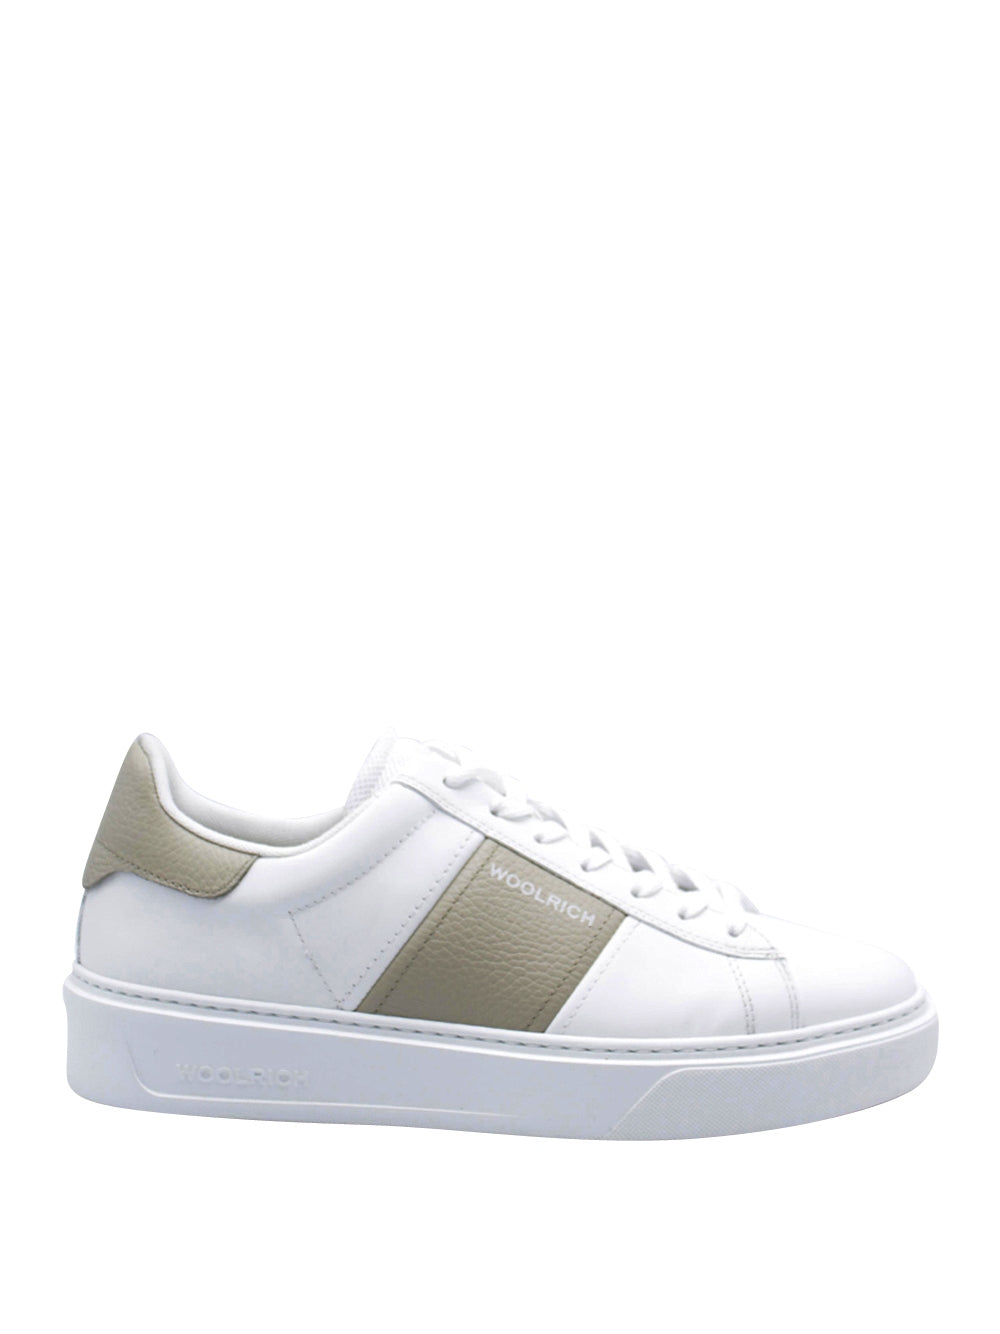 WOOLRICH Sneakers Uomo - Bianco modello WFM241.003